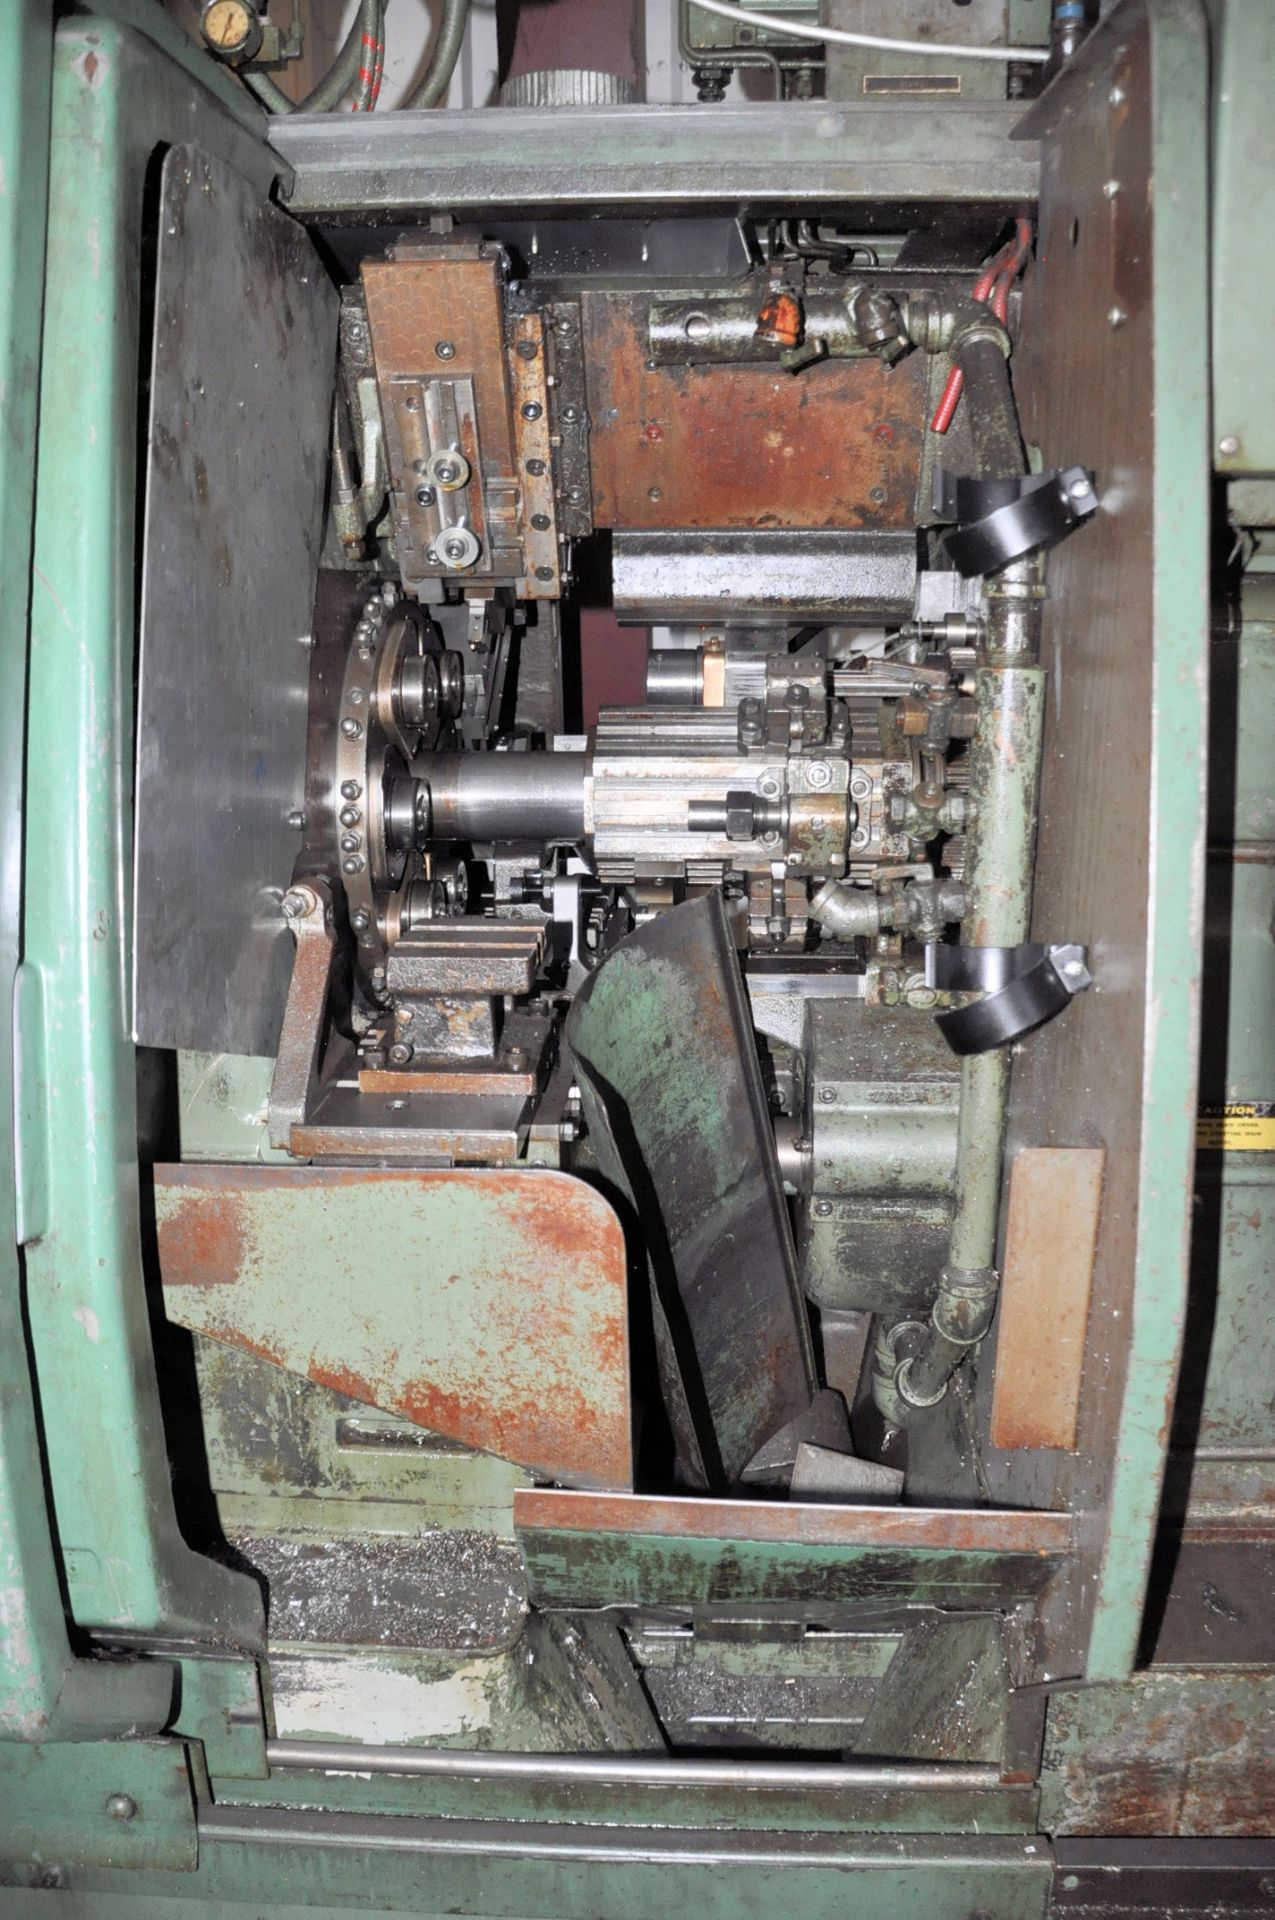 Acme-Gridley Model RAN-6, 9/16" bar Feed Screw Machine, 6-Barrel Feed, S/n C-23093-N - Image 4 of 8